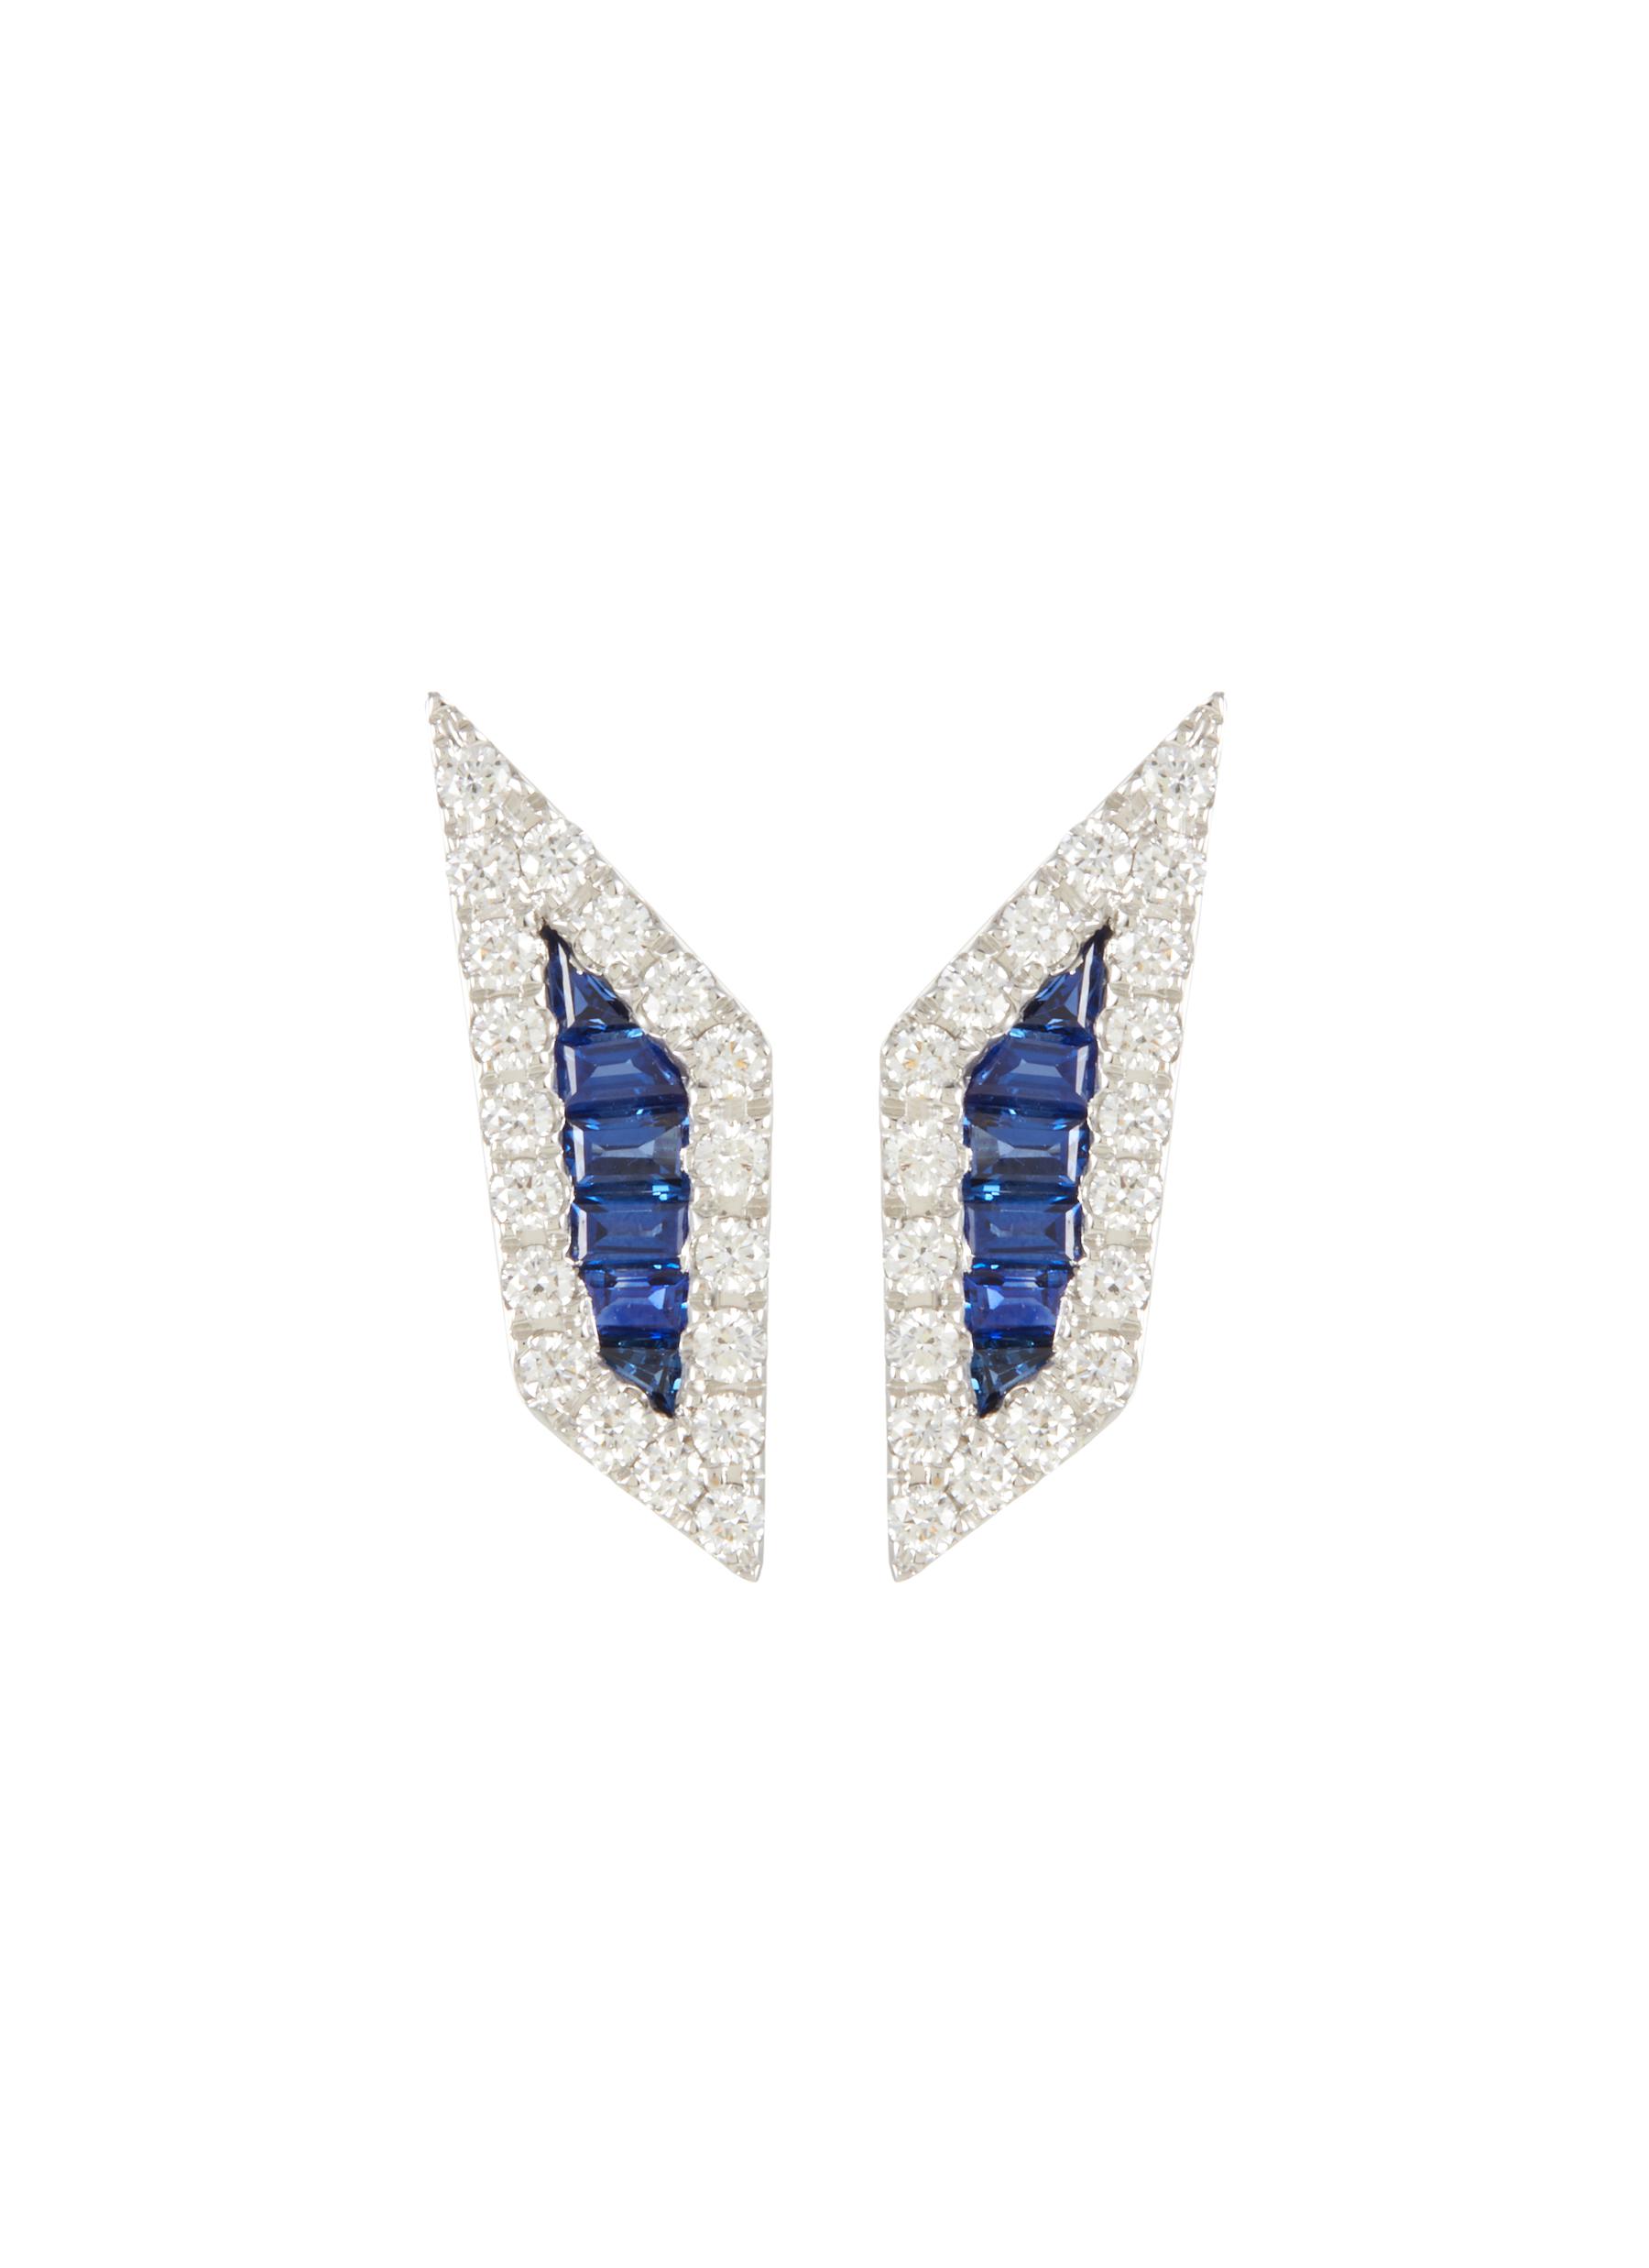 KAVANT & SHARART ‘Origami' Diamond Sapphire 18K White Gold Palm Leaf Earrings